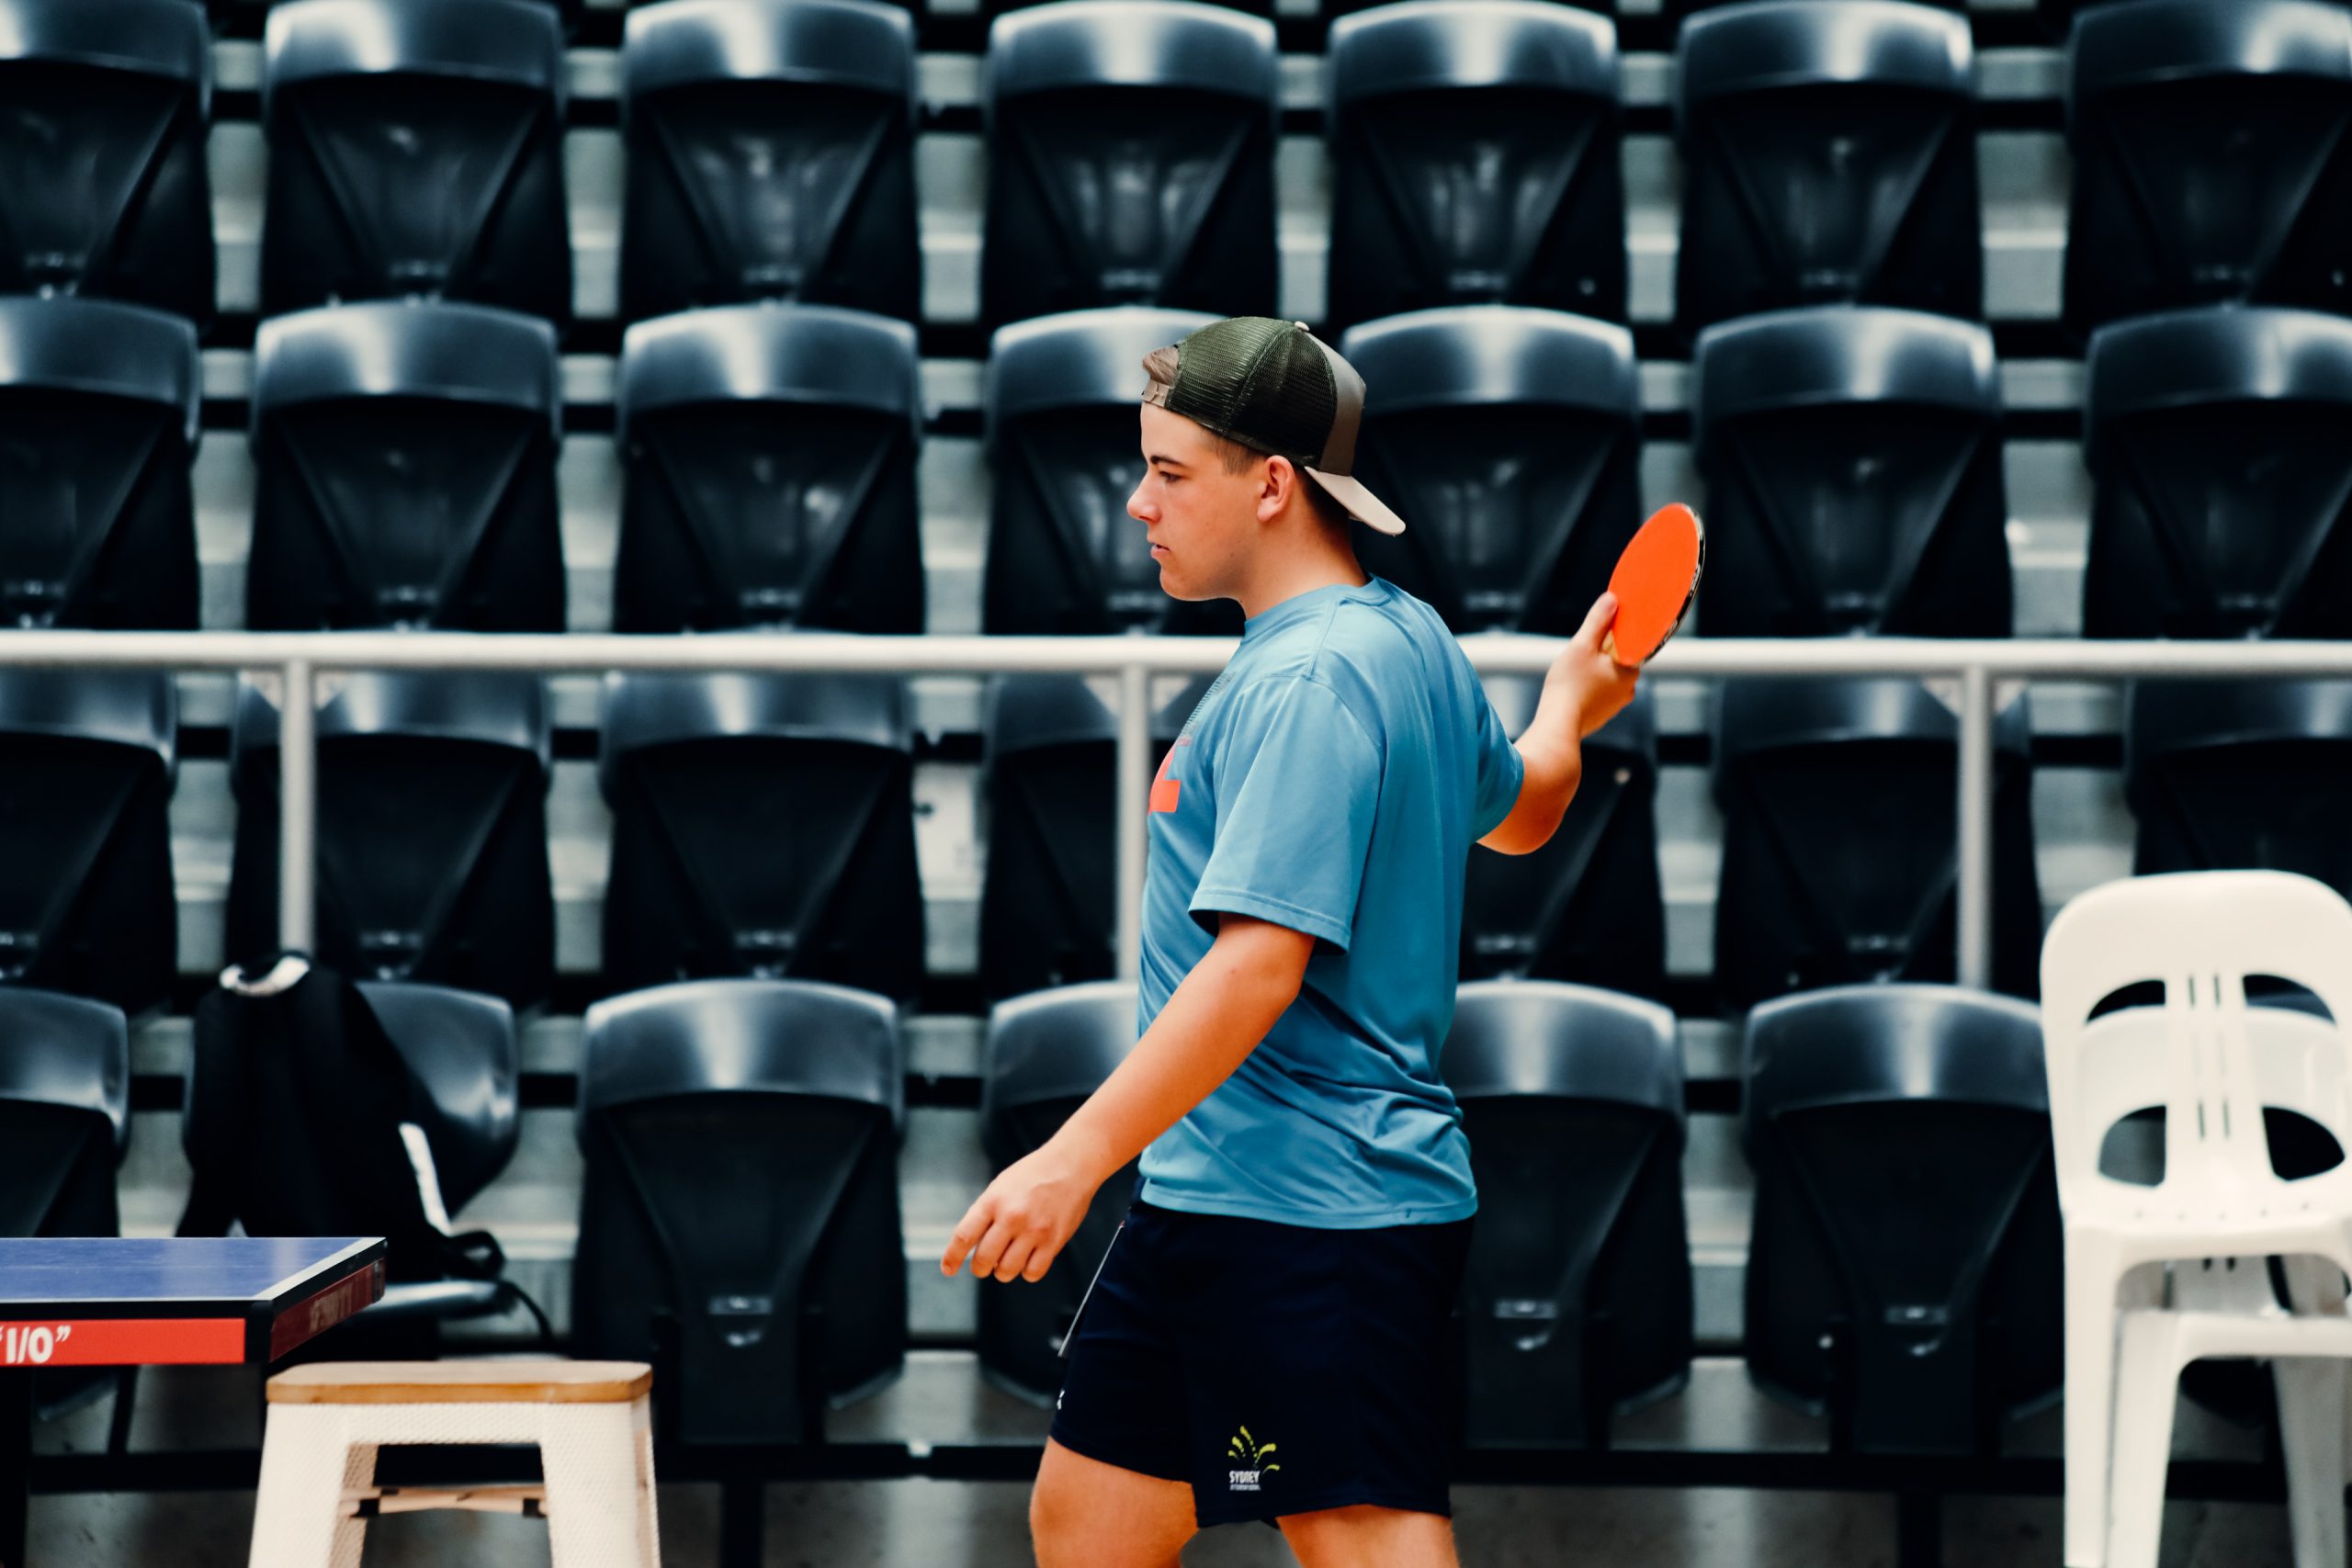 Ballkid at Sydney International Tennis 2018